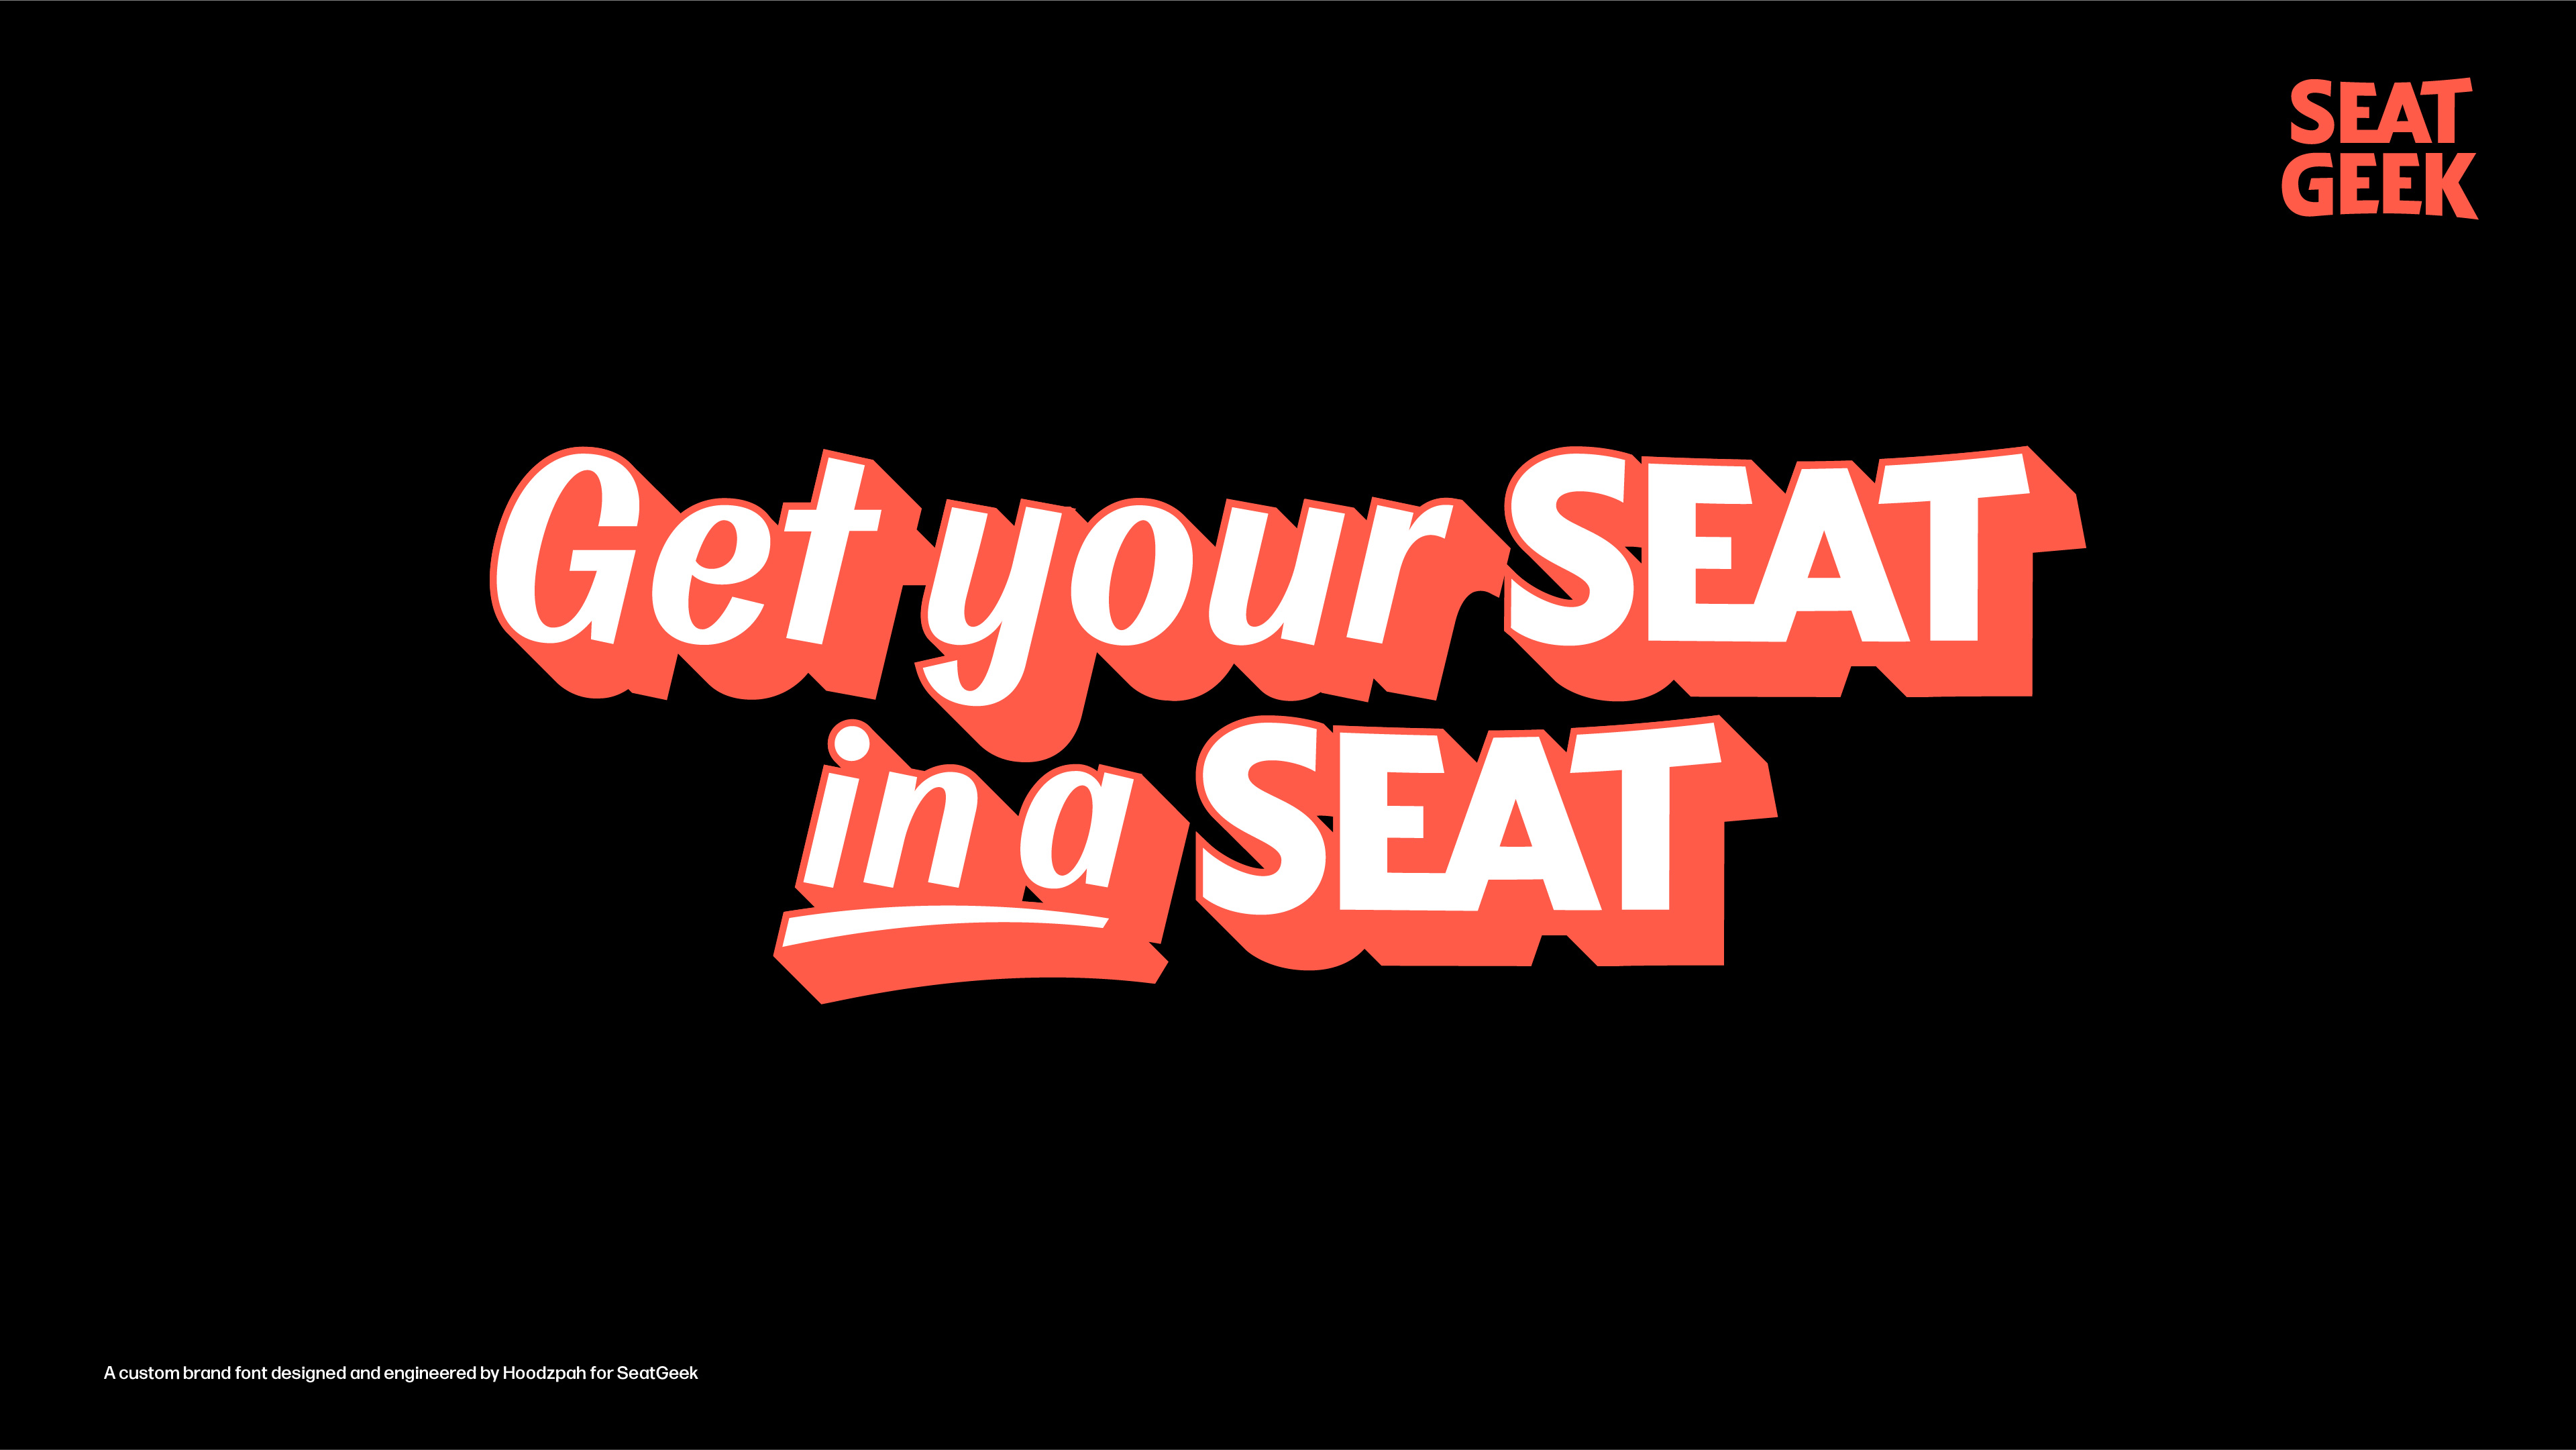 SeatGeek tagline set in Headliner brand font